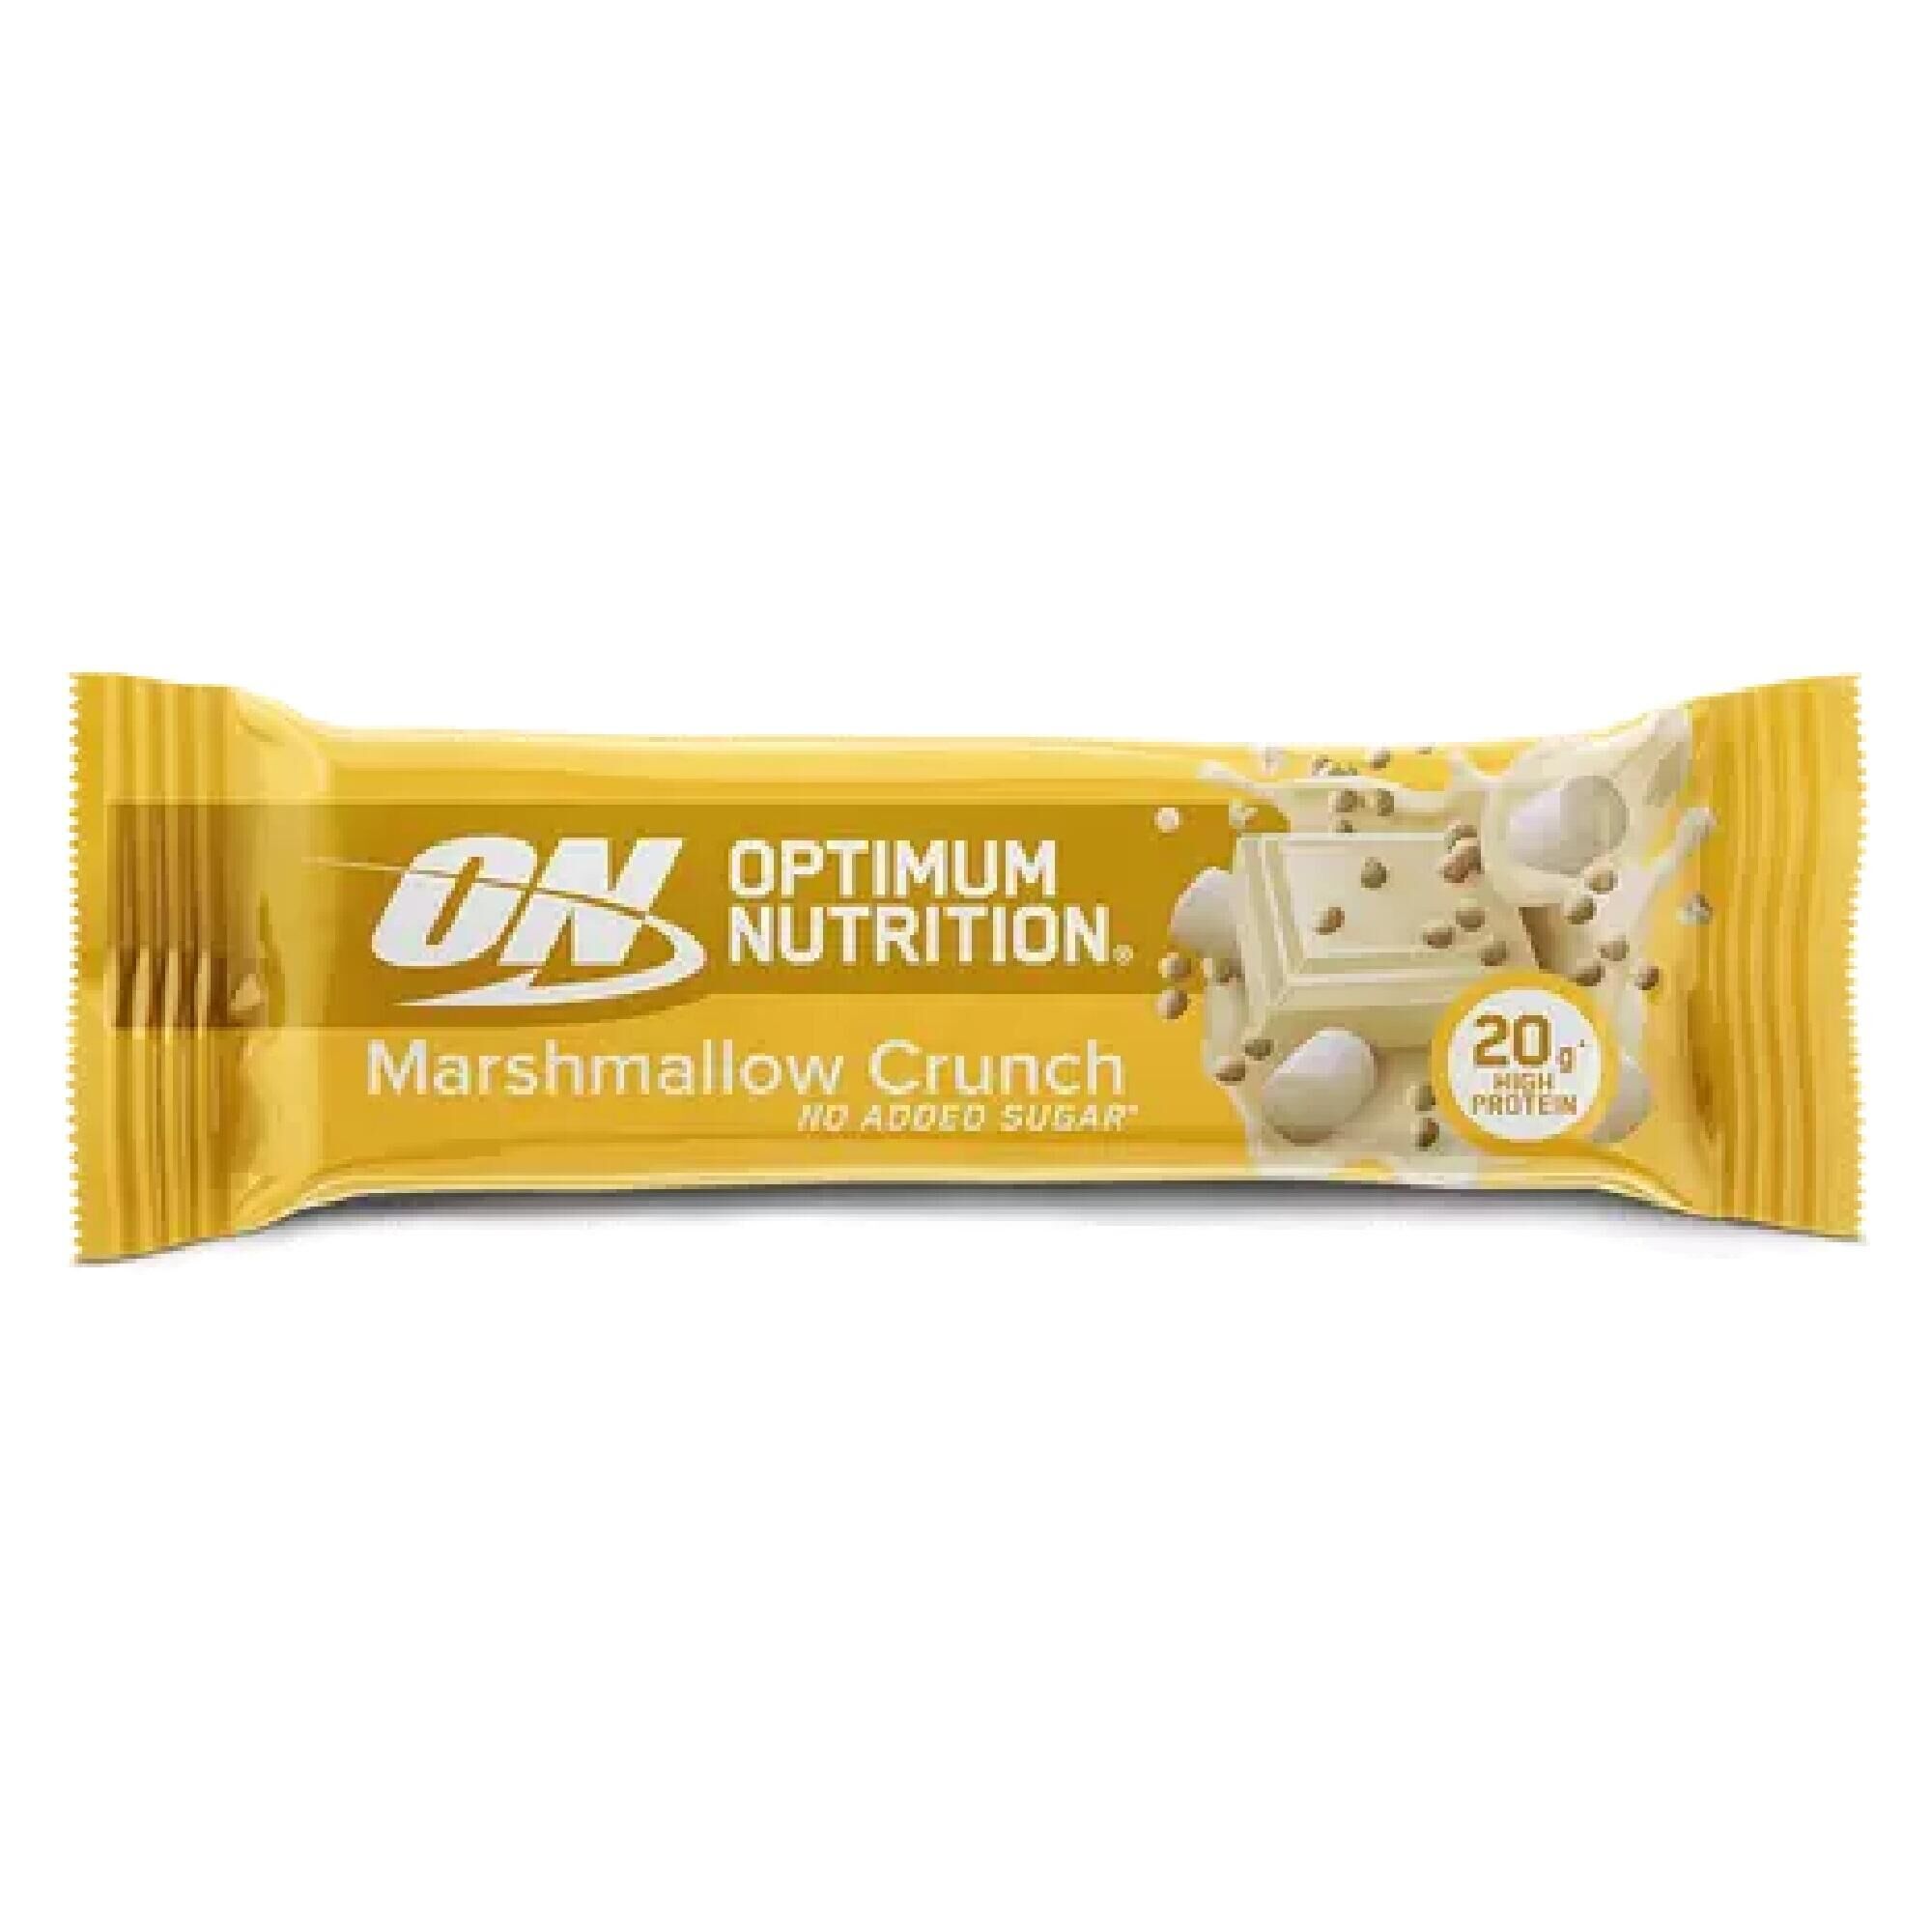 OPTIMUM NUTRITION Marshmallow Crunch Protein Bar